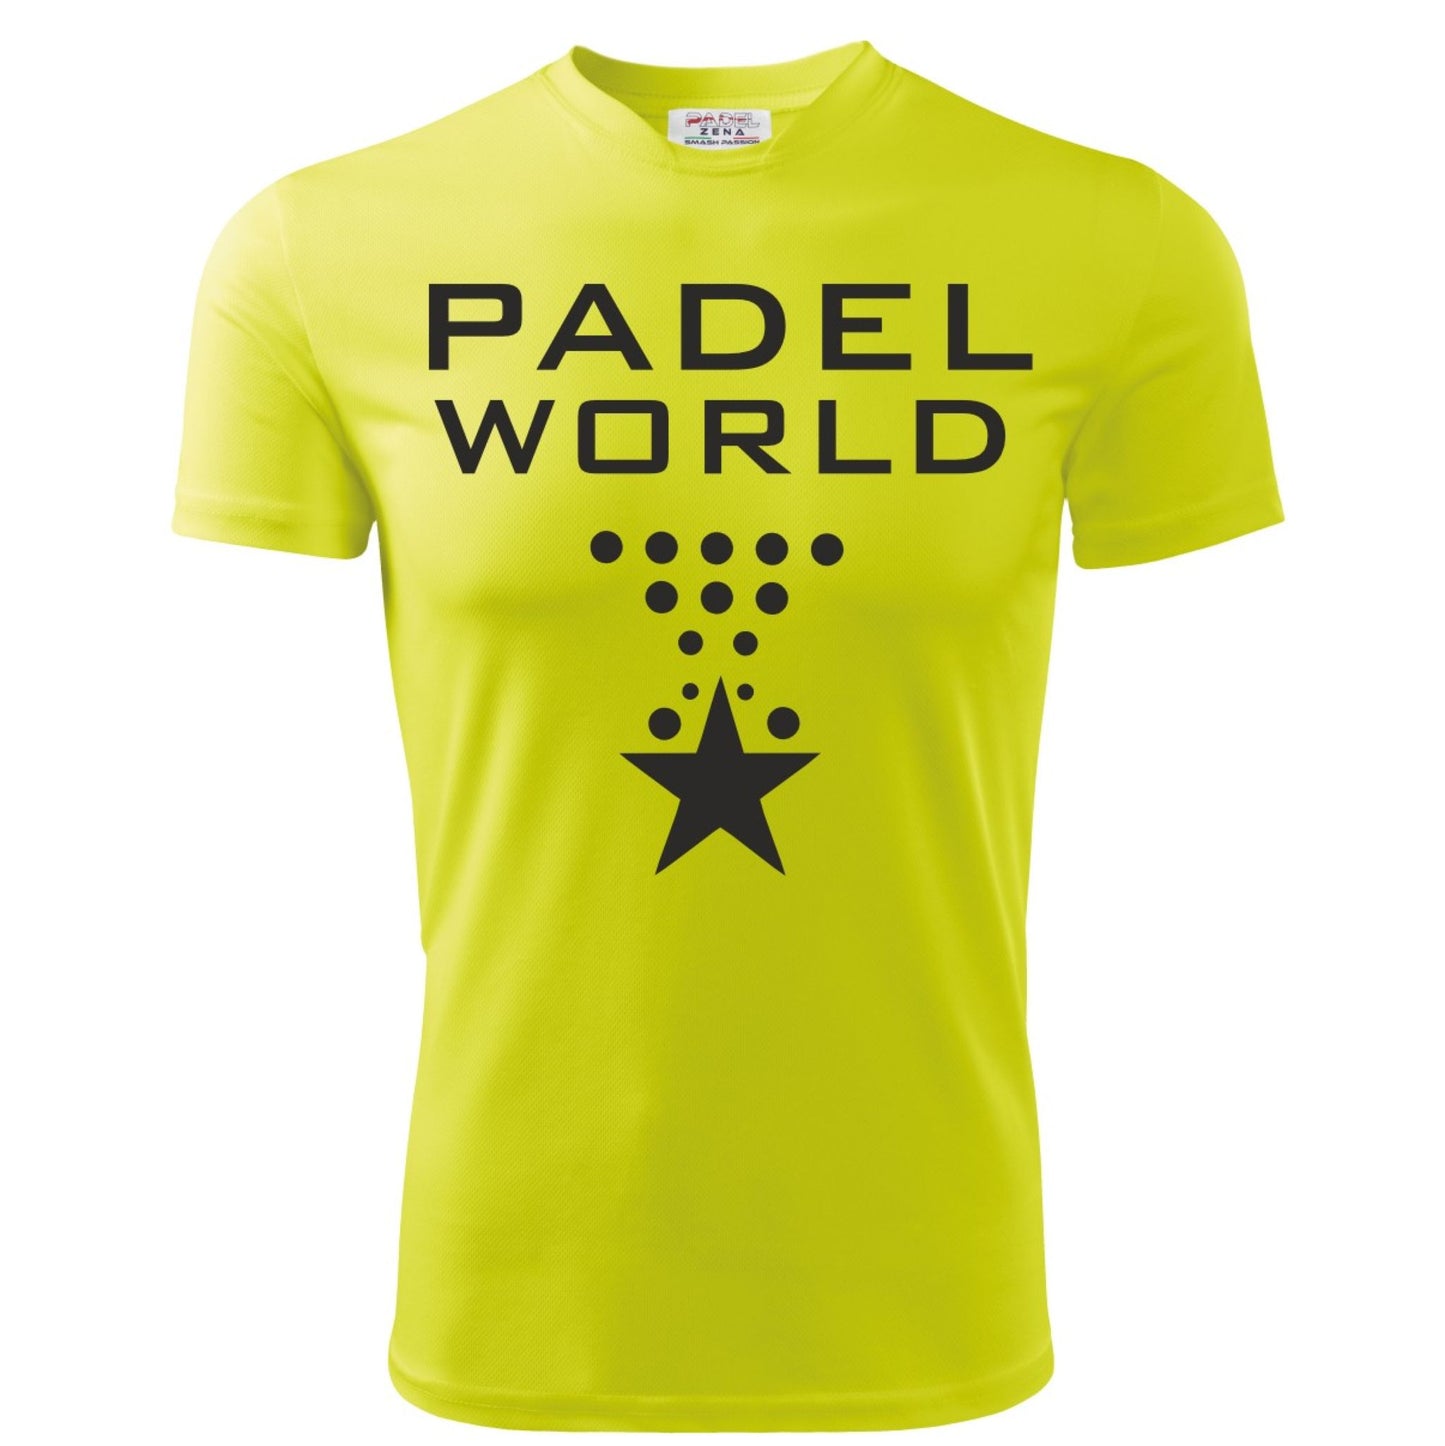 Padel World